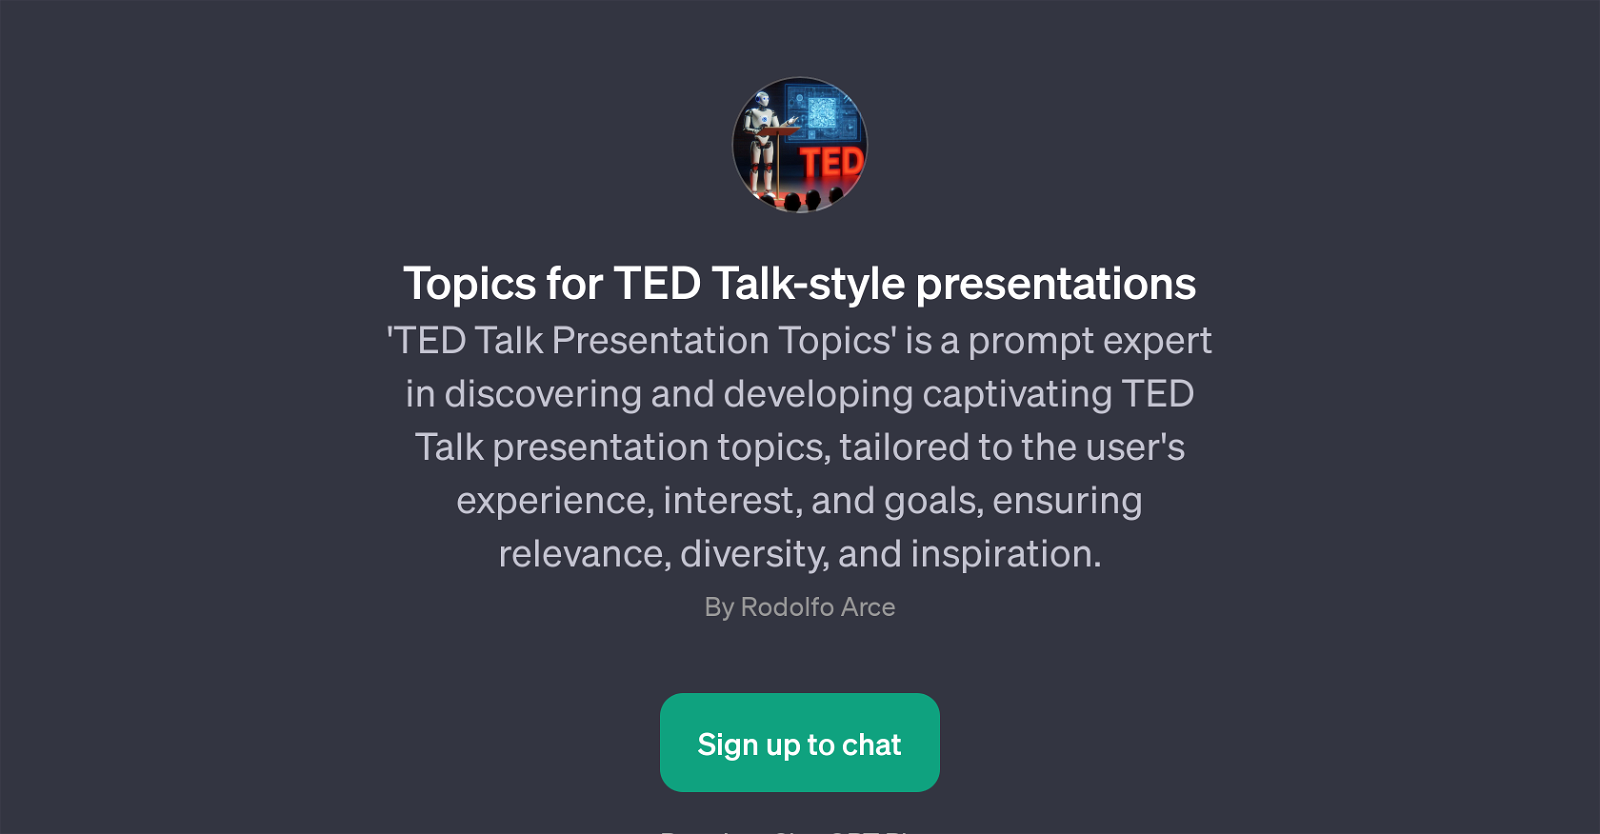 TED Talk Presentation Topics website